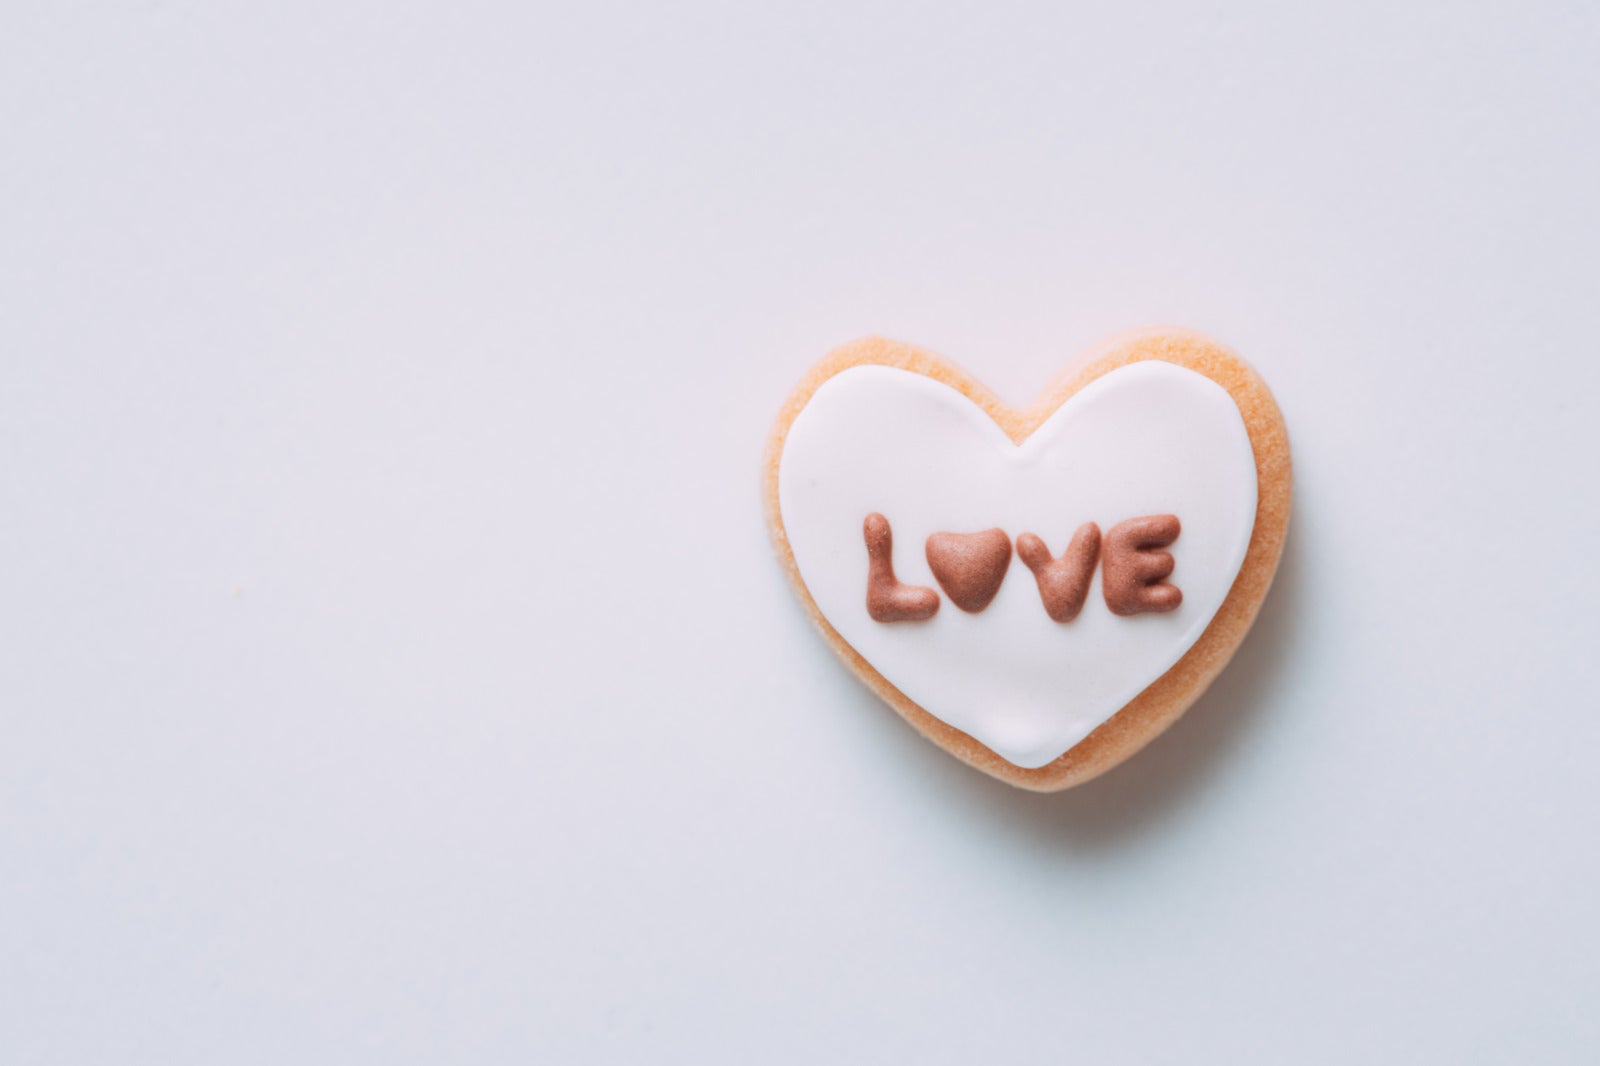 「LOVEと書かれたアイシングクッキー」の写真